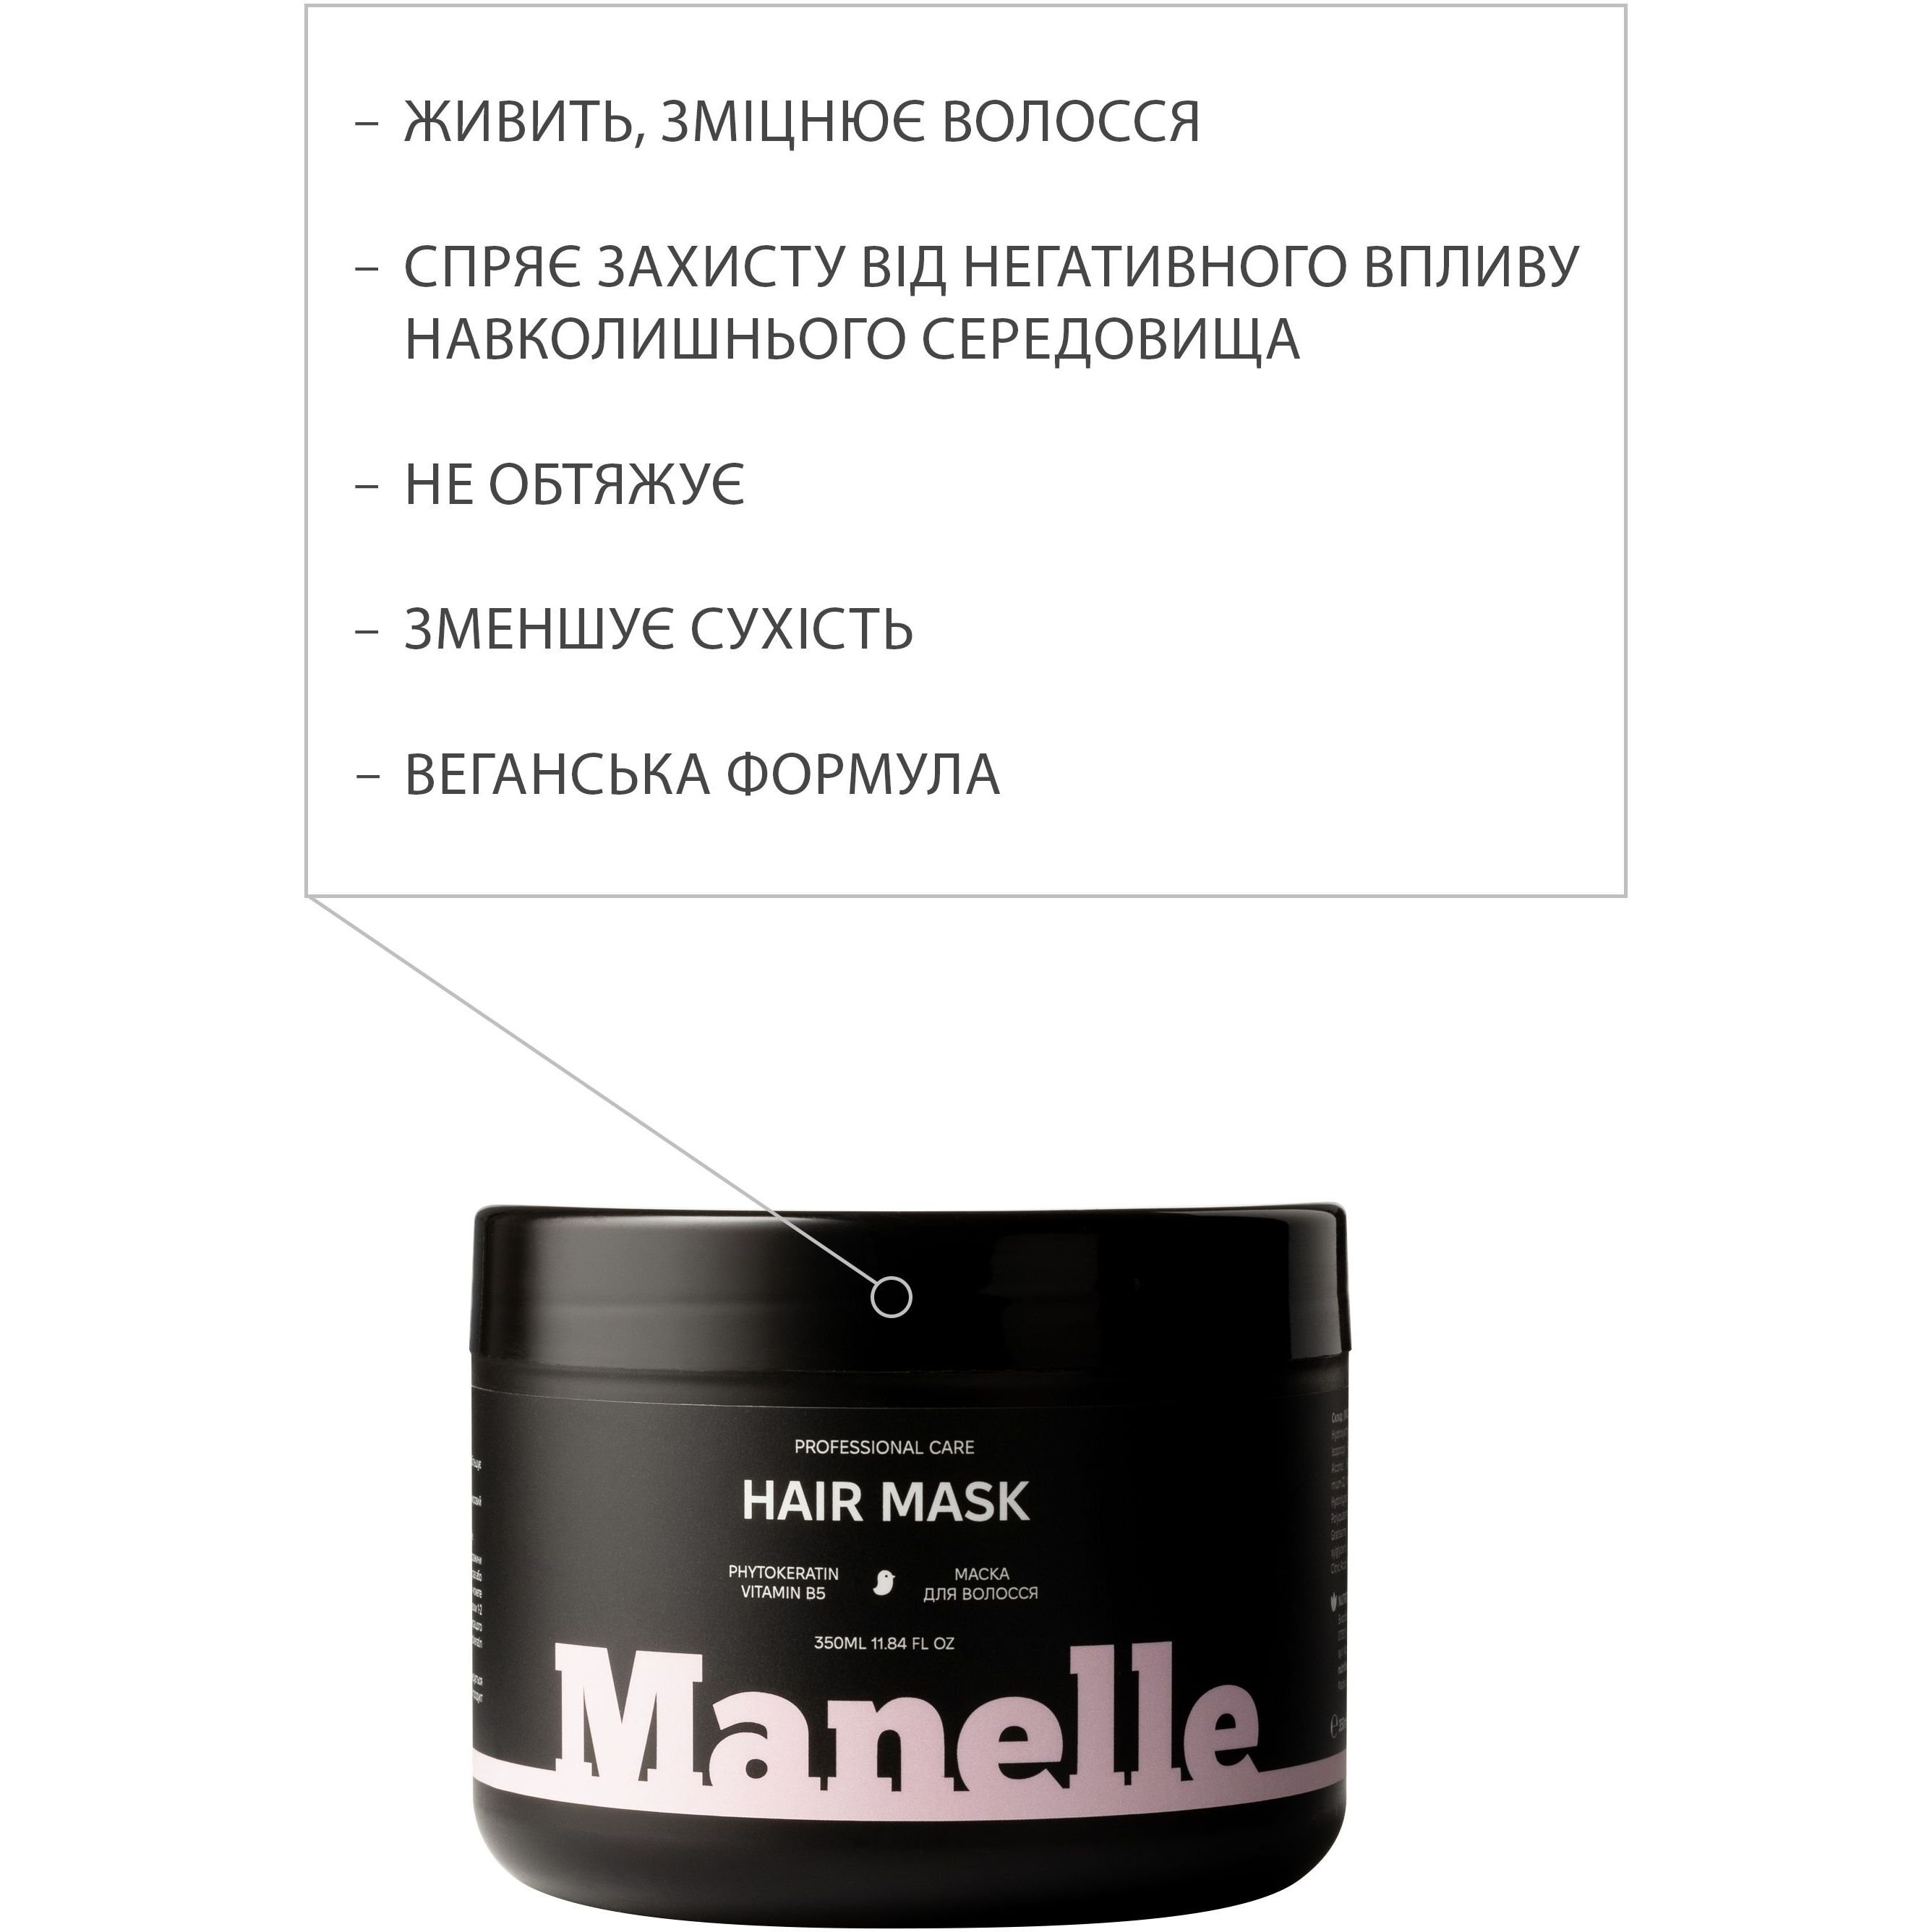 Маска для волос Manelle Рrofessional care Phytokeratin vitamin B5 350 мл - фото 2